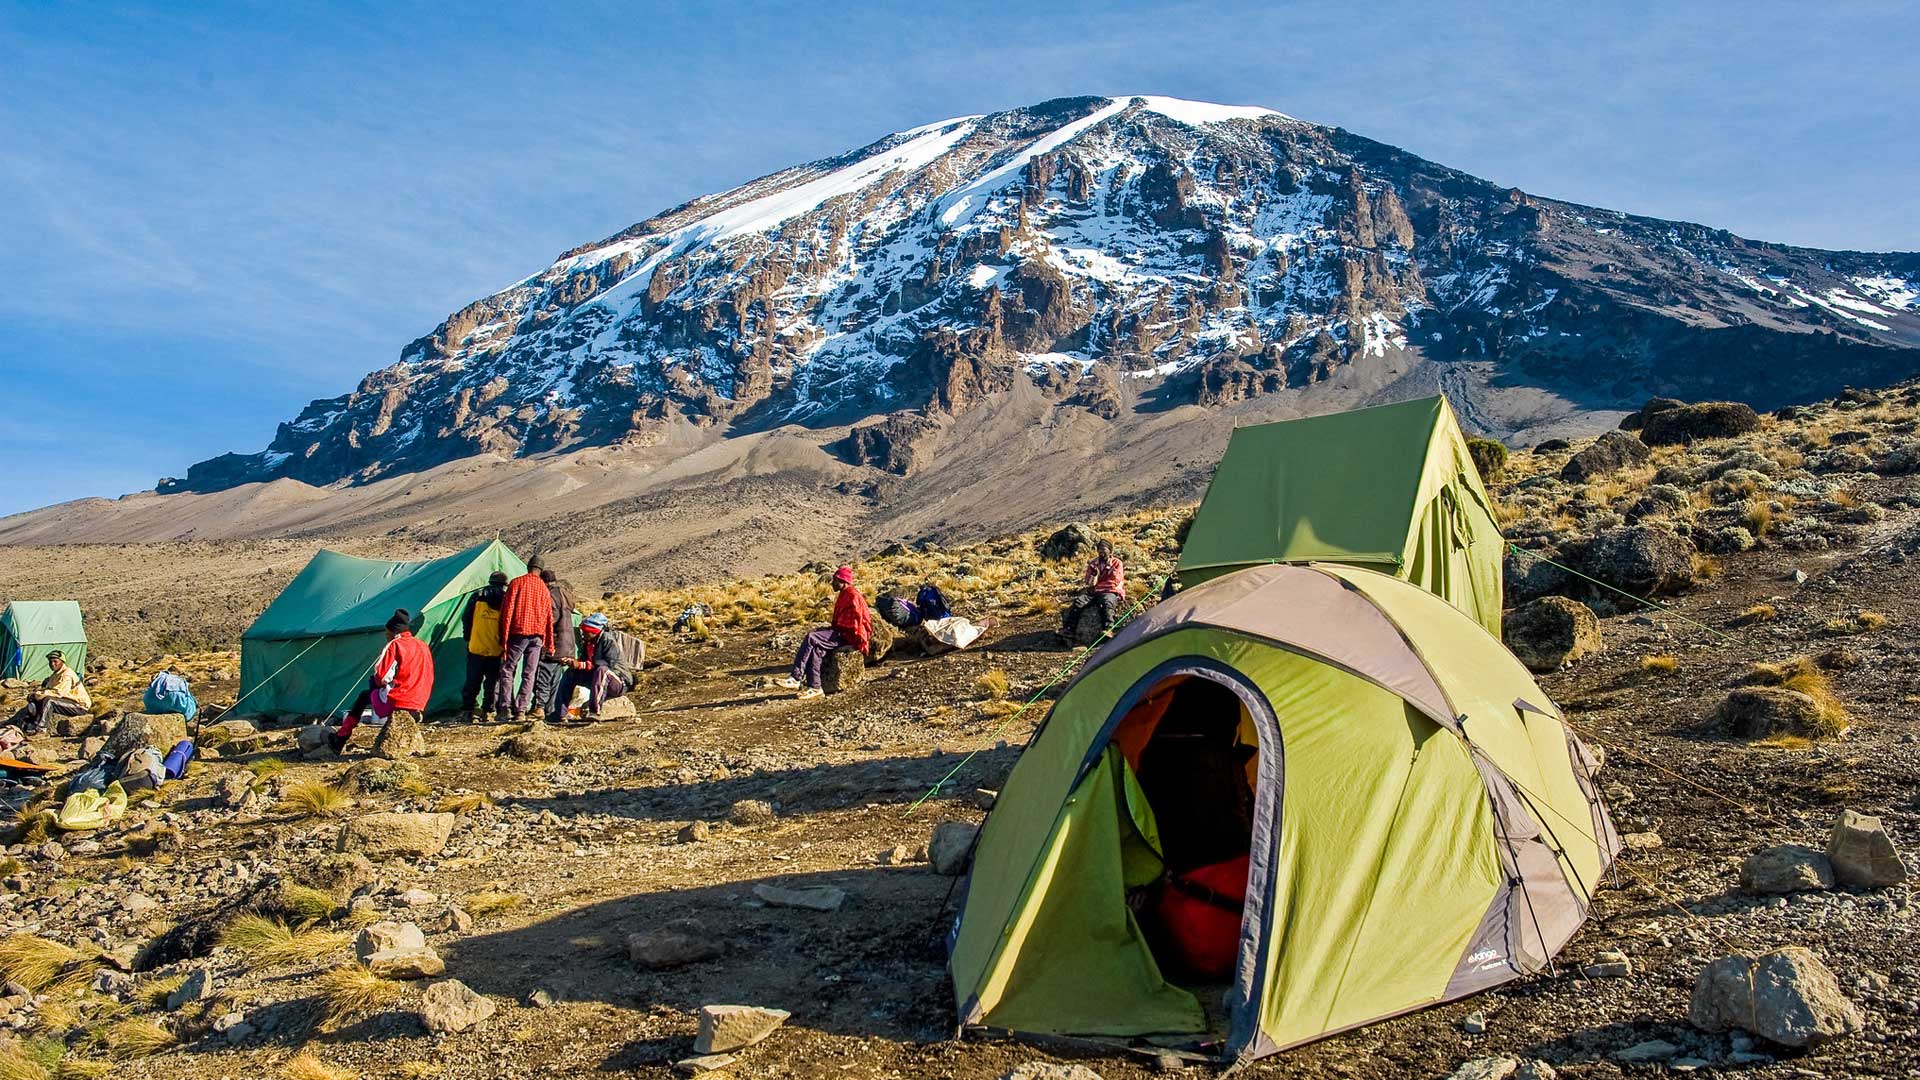 Mount Kilimanjaro Climbing Lemosho Route